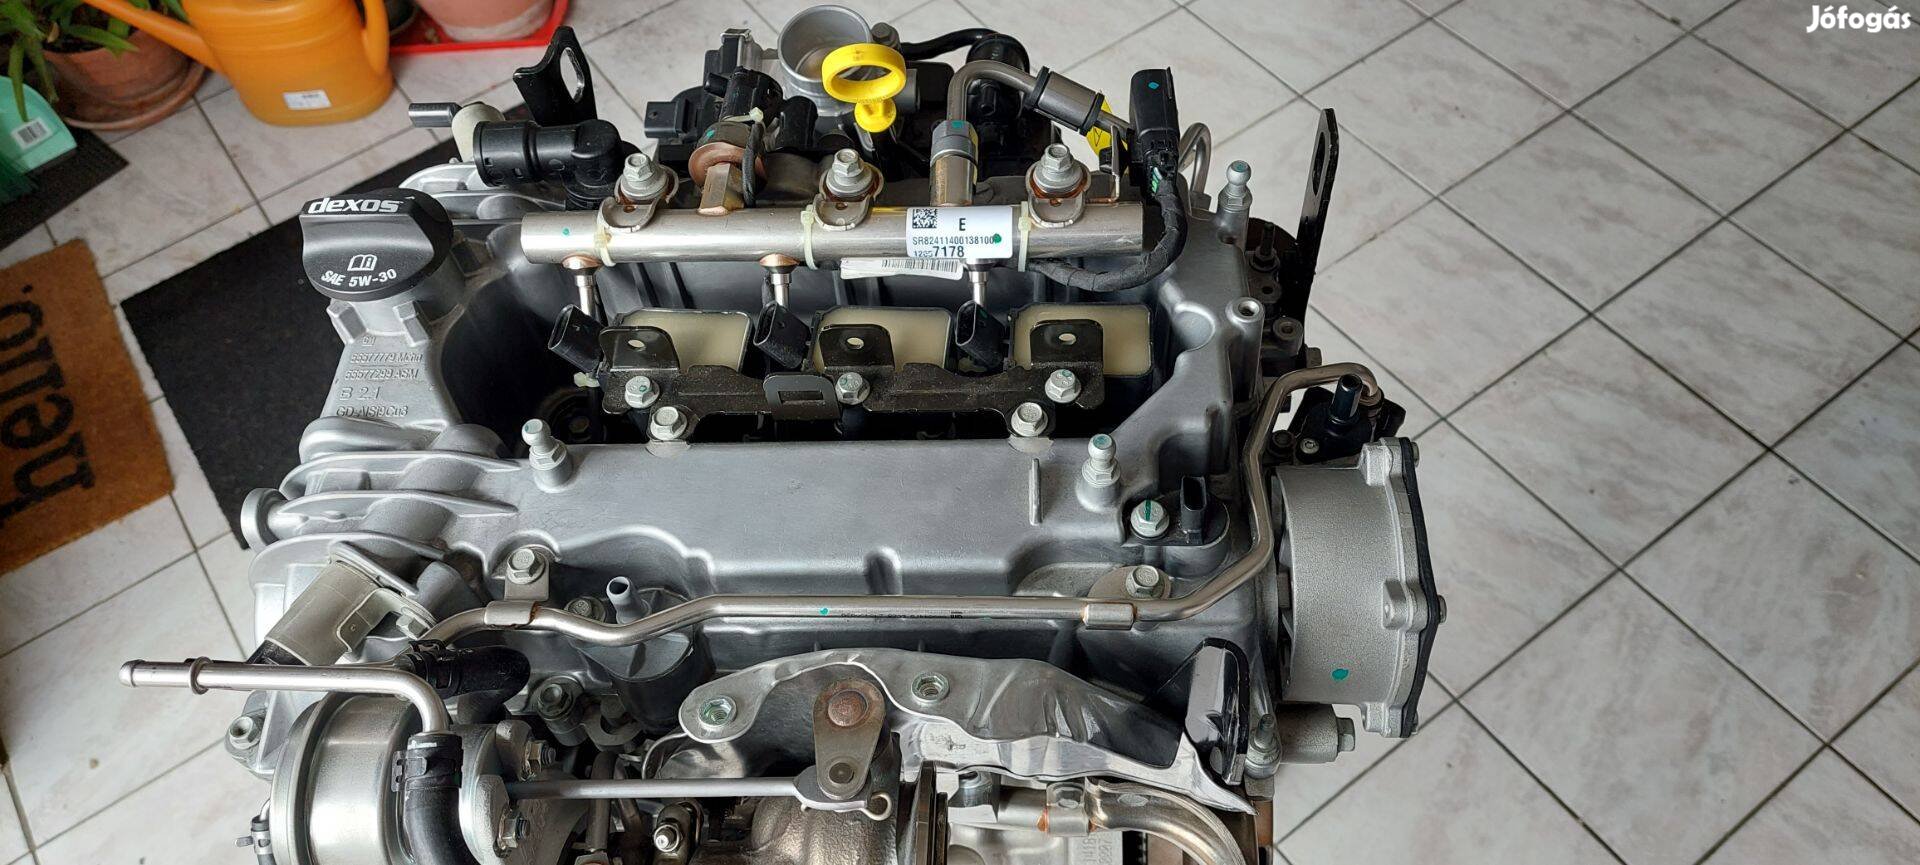 Opel Motor ( ADAM , Corsa , Astra ) 85 KW 115 LE